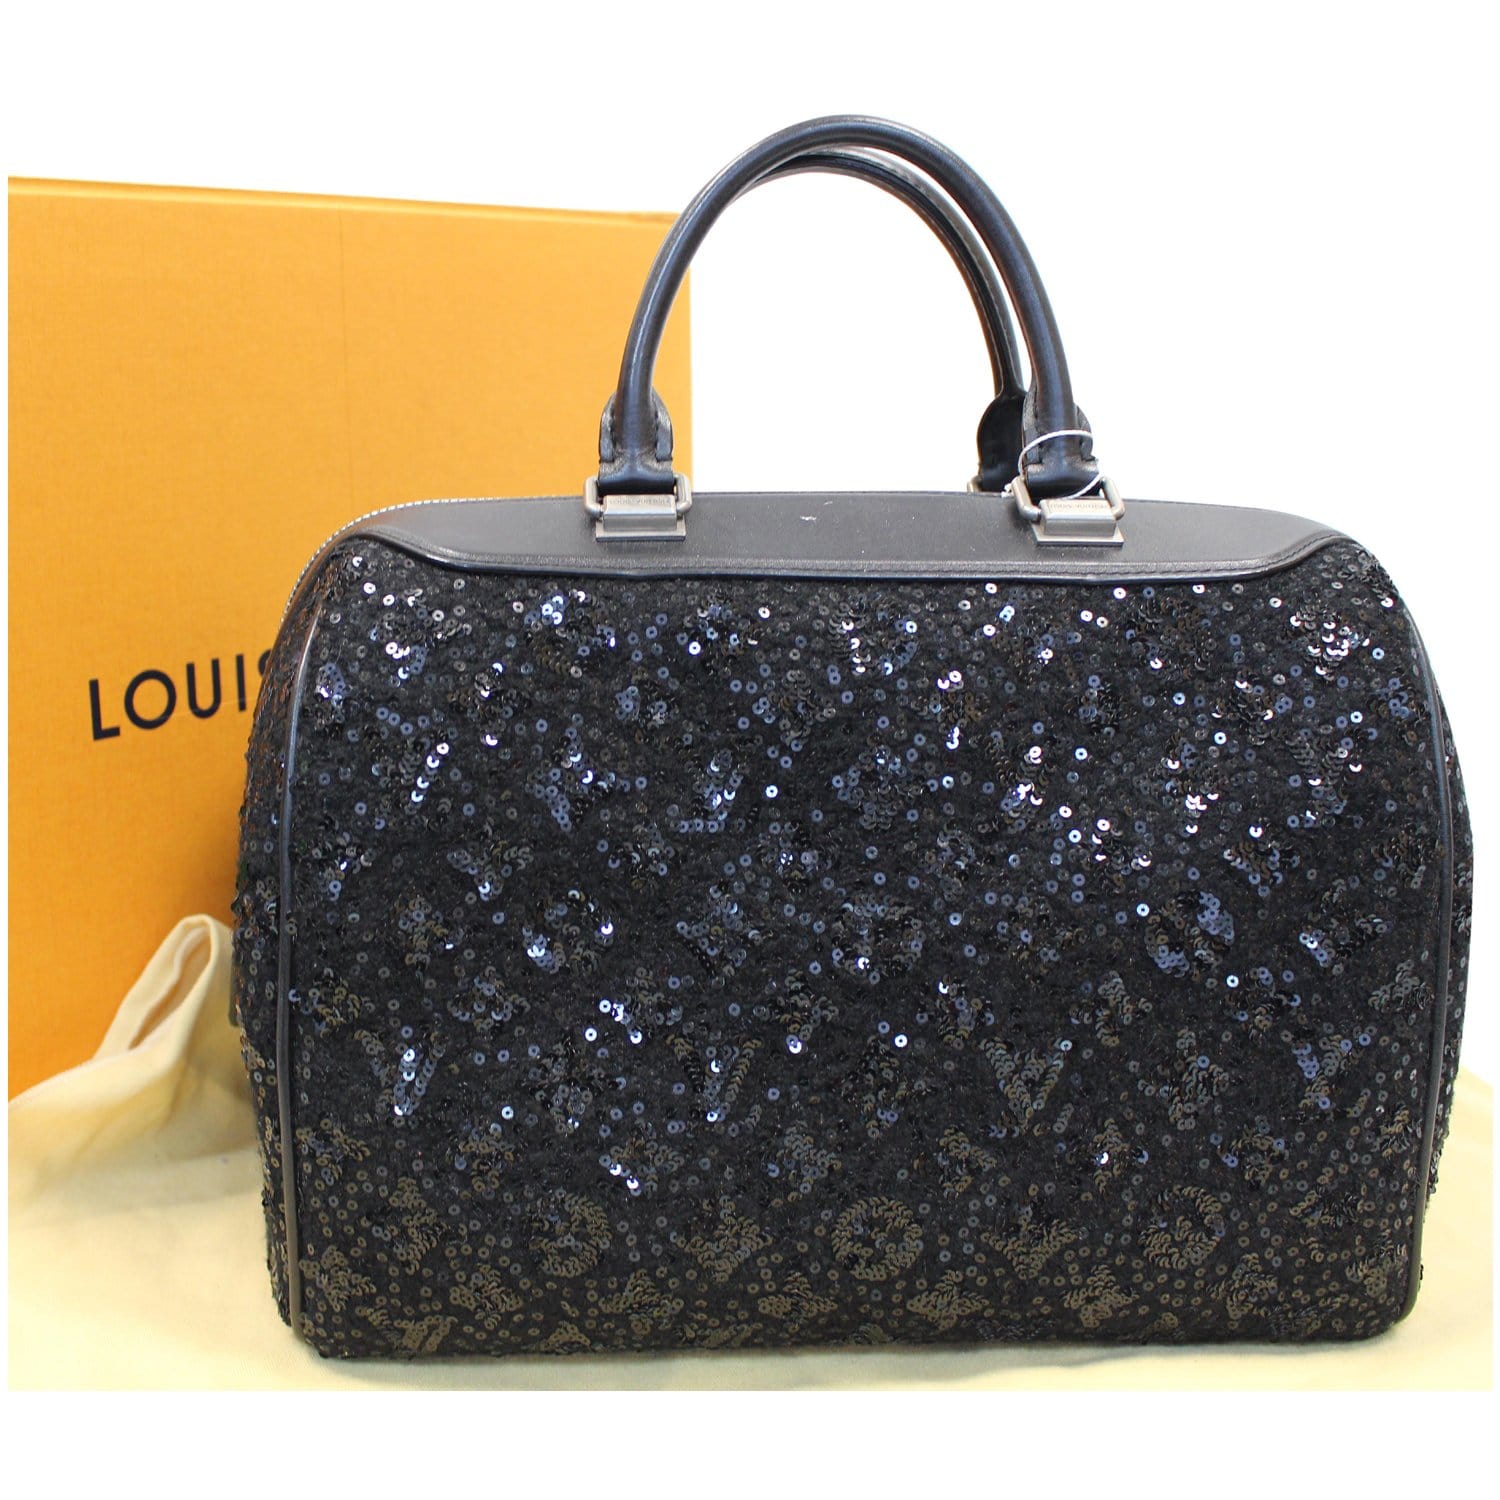 Unboxing of a rare Louis Vuitton sunshine express sequin speedy